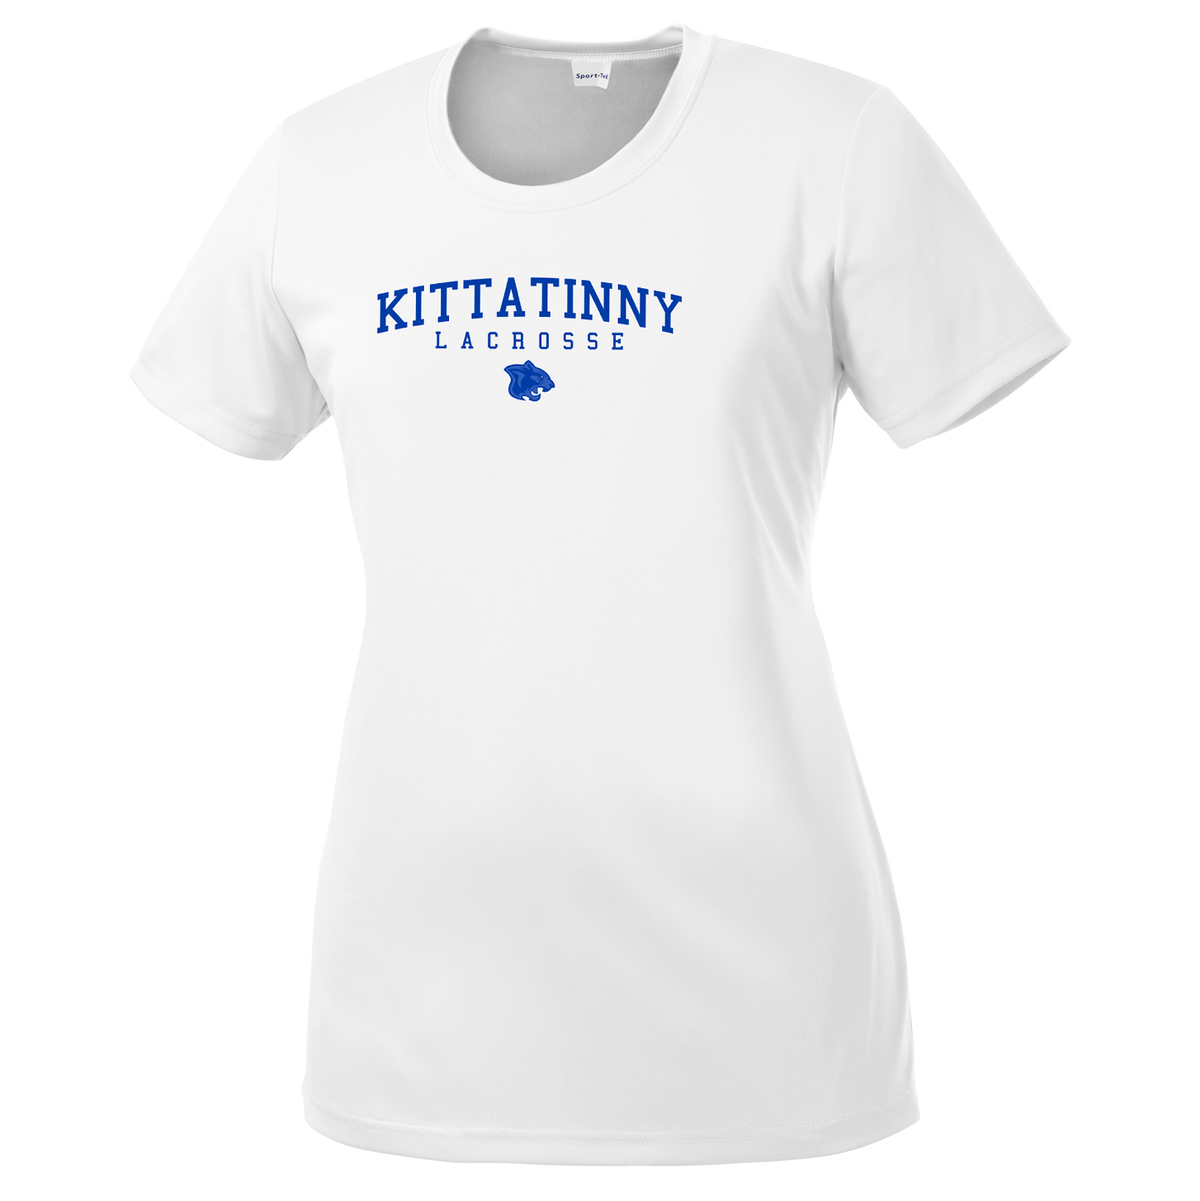 Kittatinny Lacrosse Women's Performance Tee